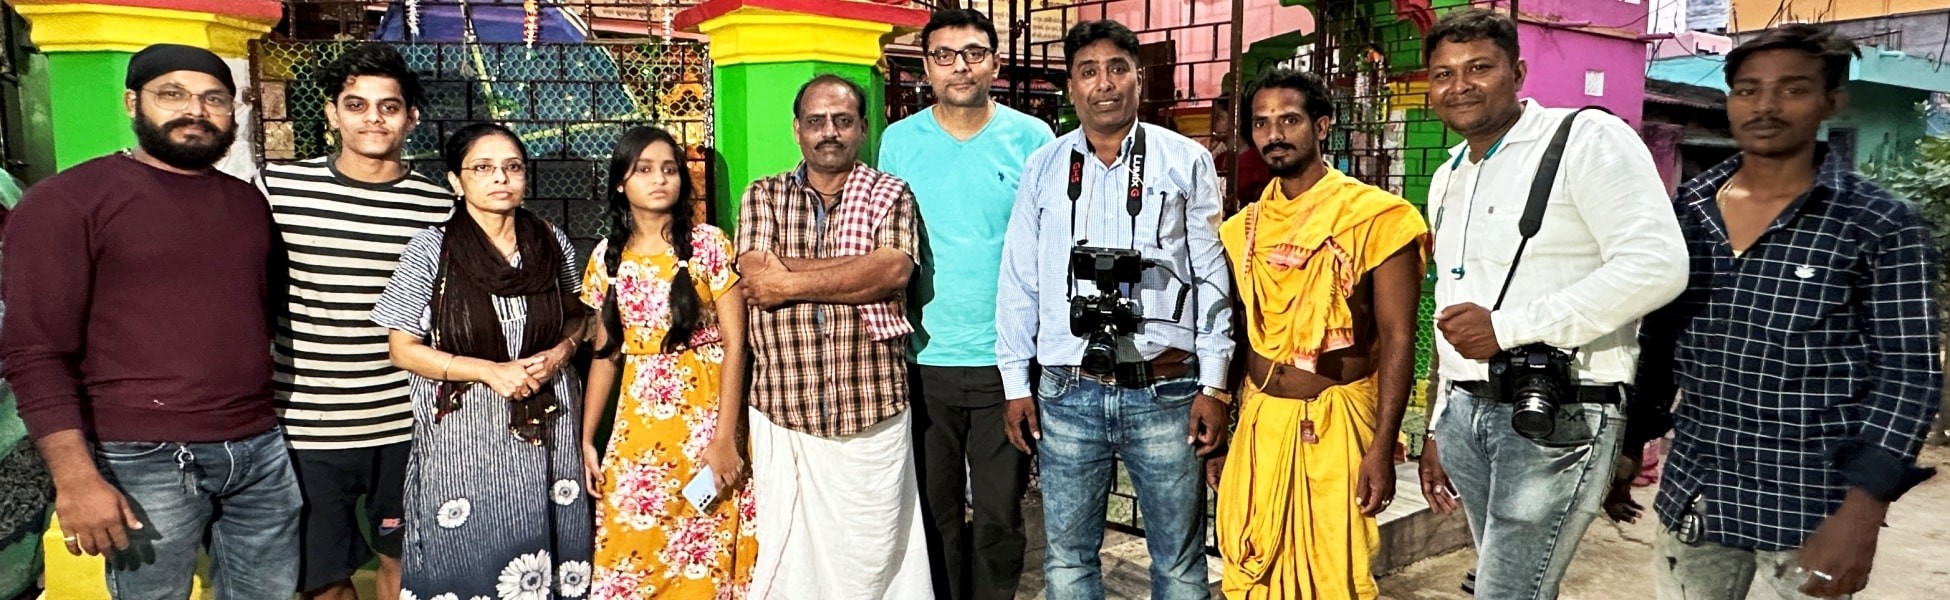 film shooting locations in Tiruvannamalai, video shooting locations in Tiruvannamalai, tv shooting locations in Tiruvannamalai, shooting locations in Tiruvannamalai